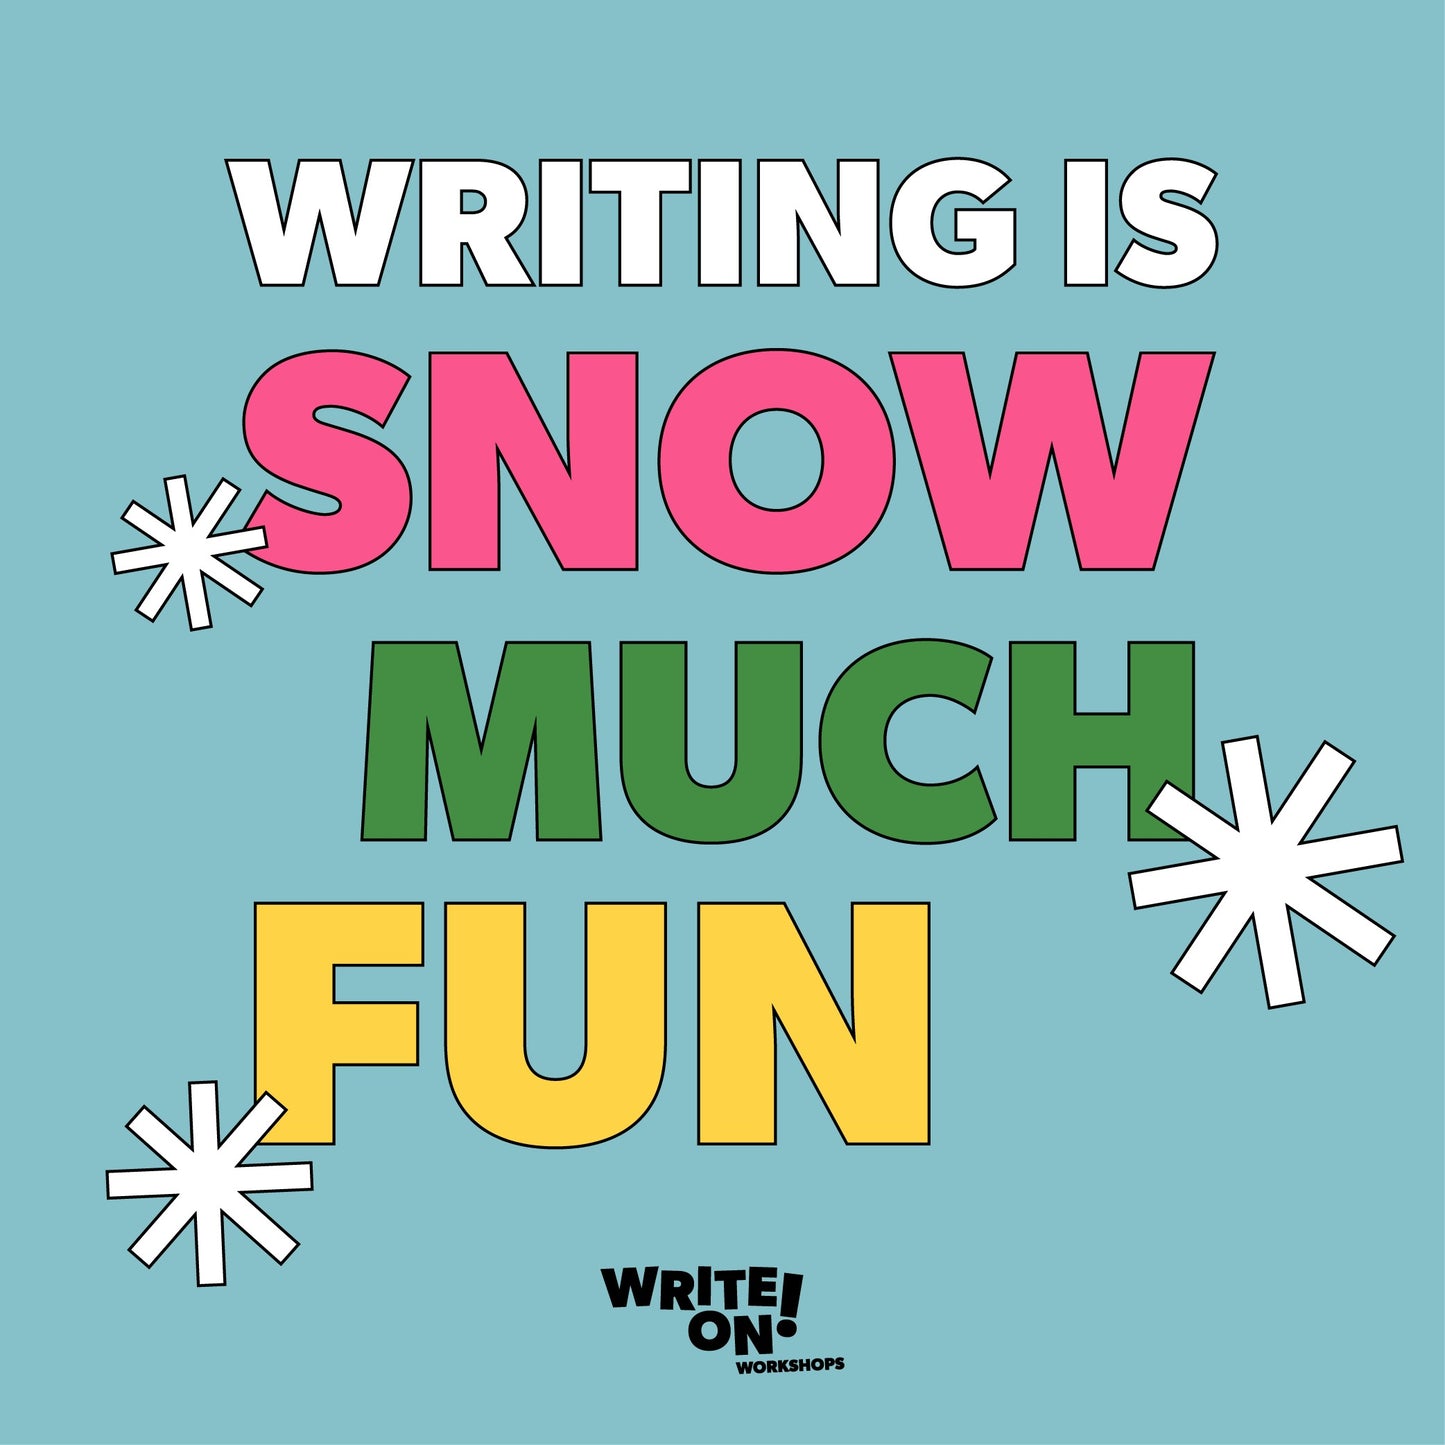 Snow Much Fun Writer's Box - Printable